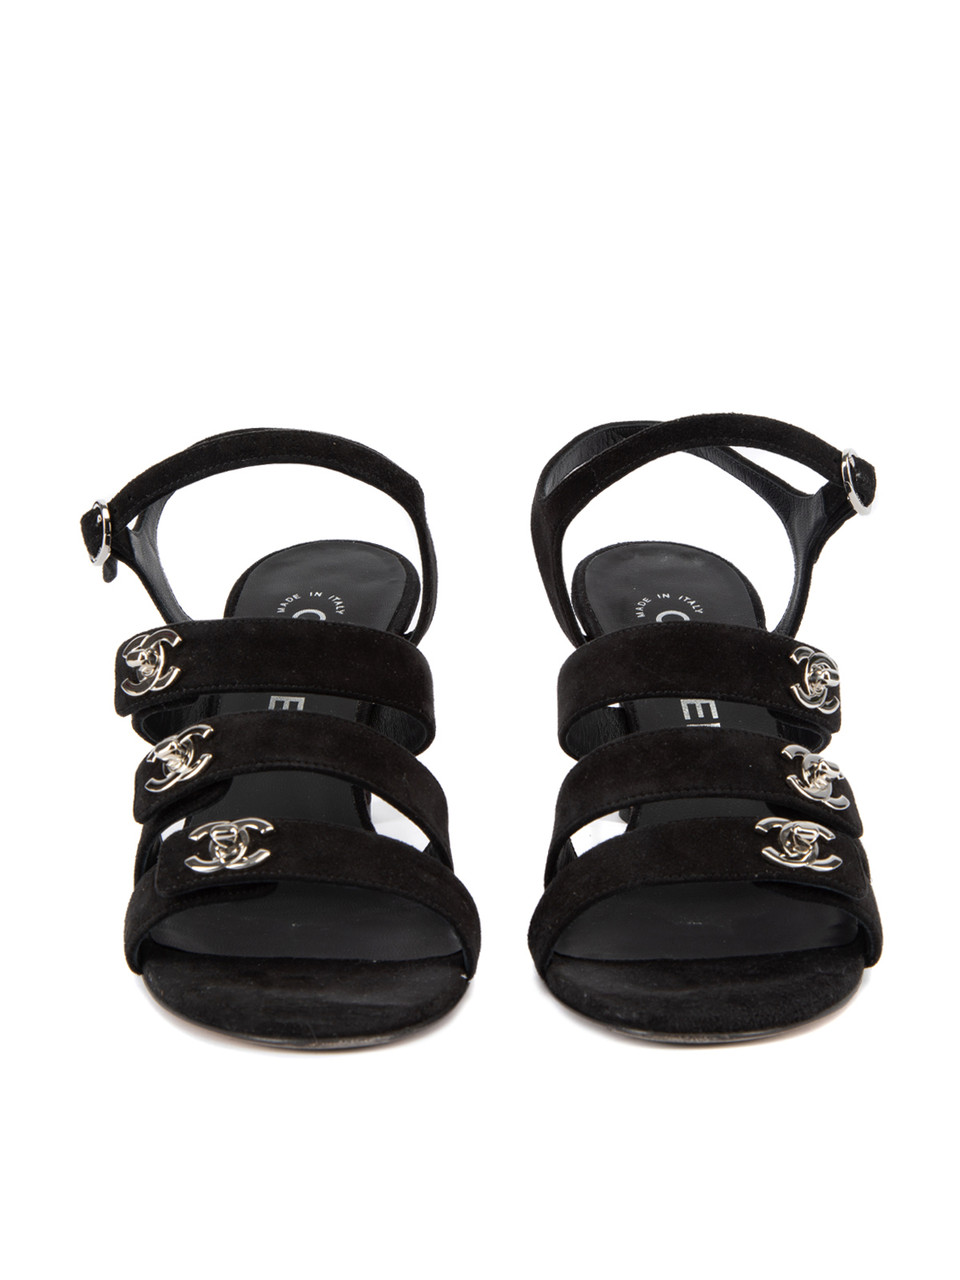 Chanel Black Suede CC Turn Lock Strappy Sandals